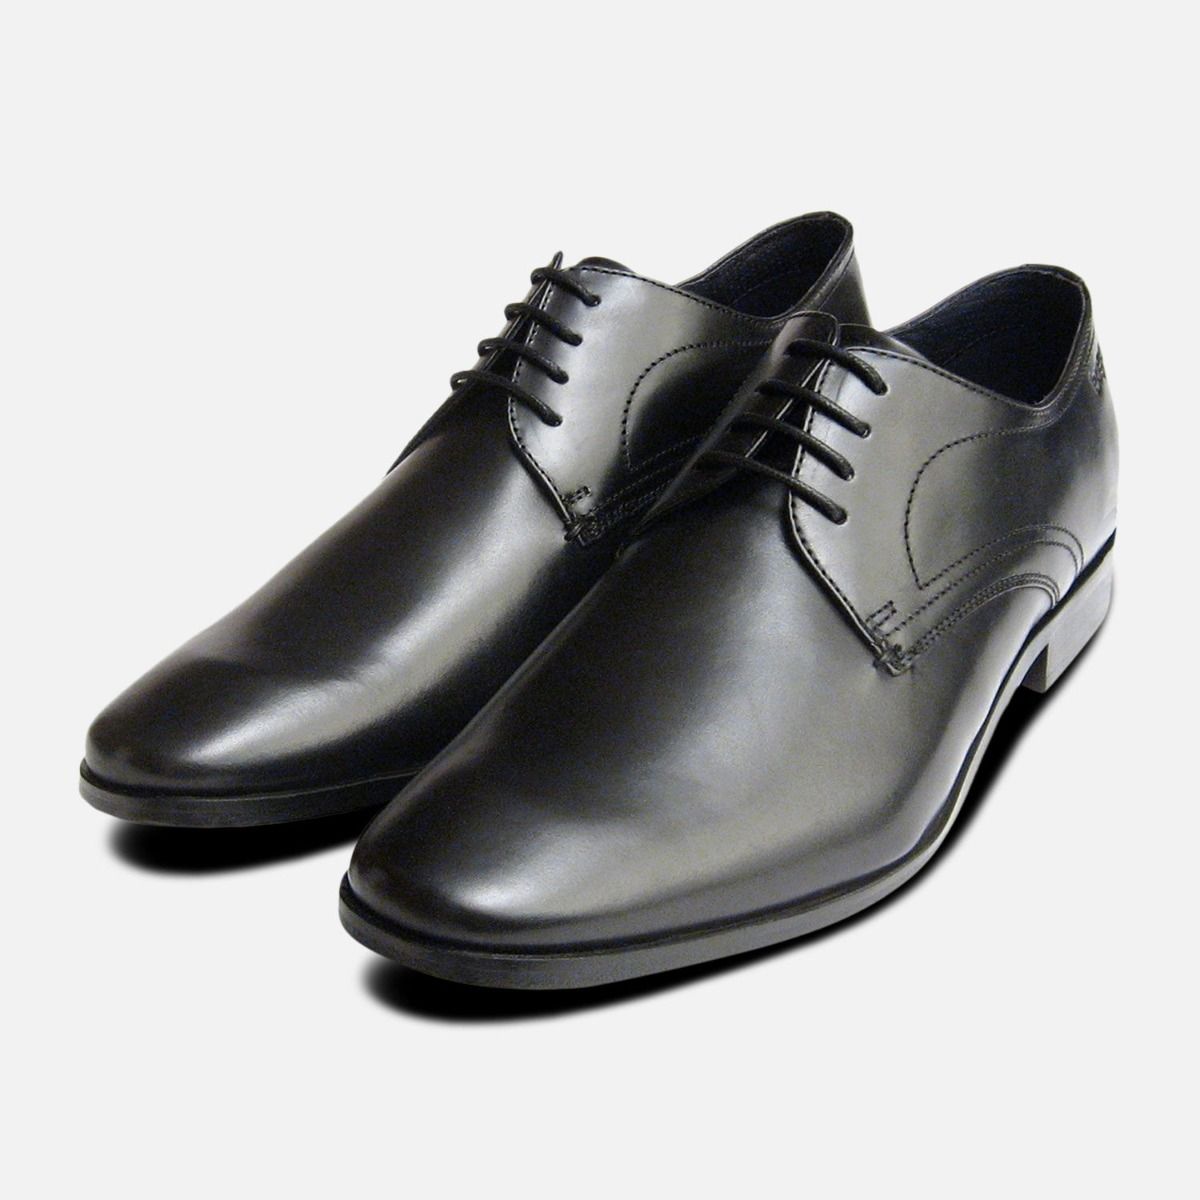 Mens Formal Designer Bugatti Shoes in Black Calf